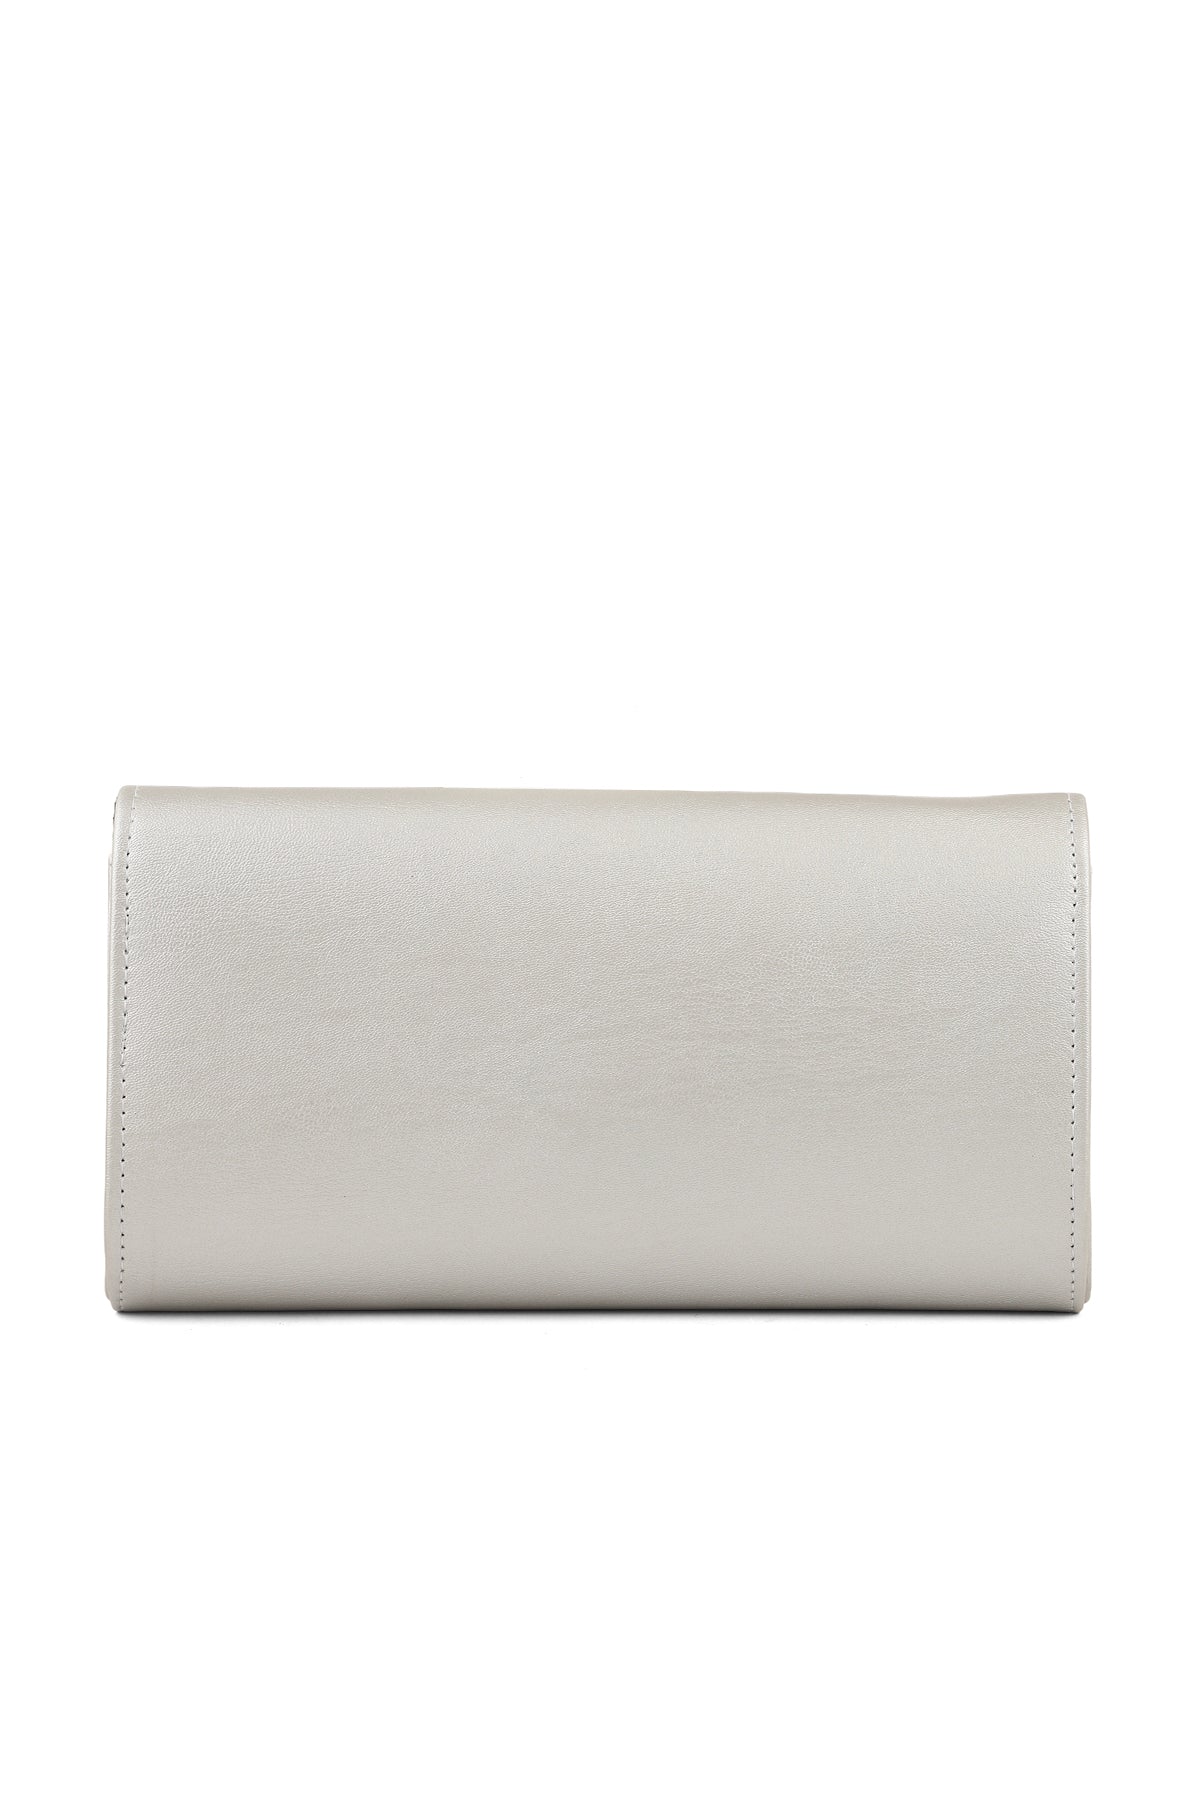 Flap Shoulder Bags B21585-Silver